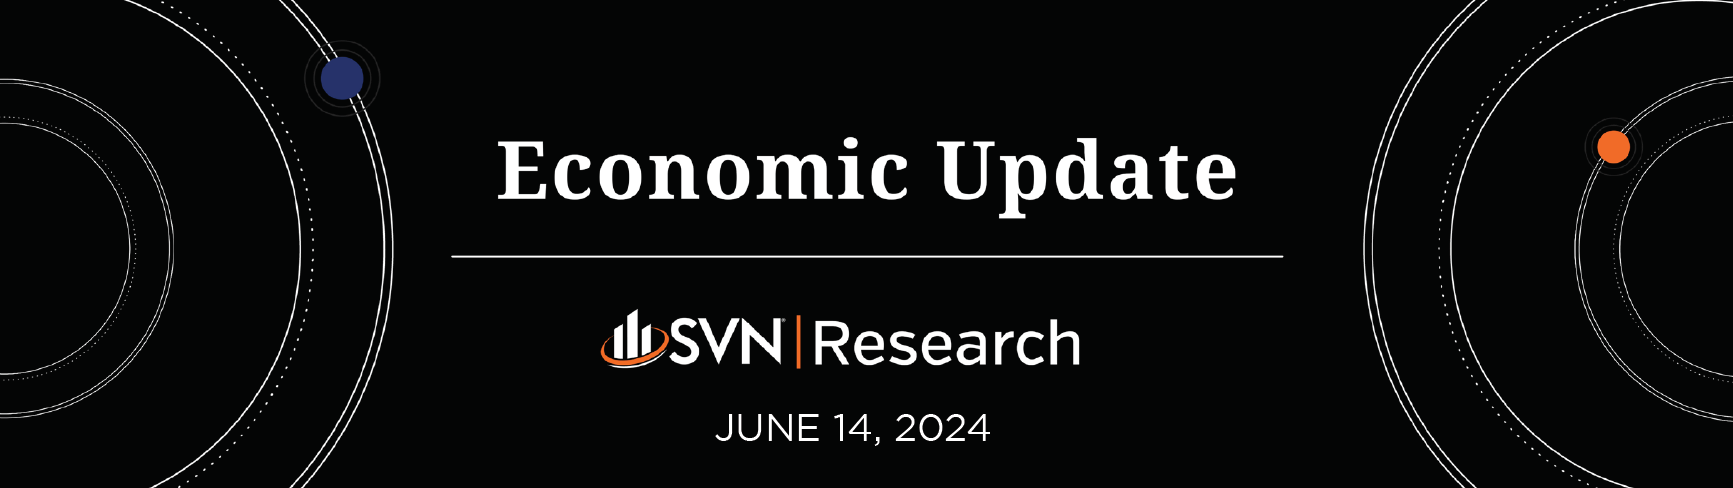 SVN | Research Economic Update 6.14.2024